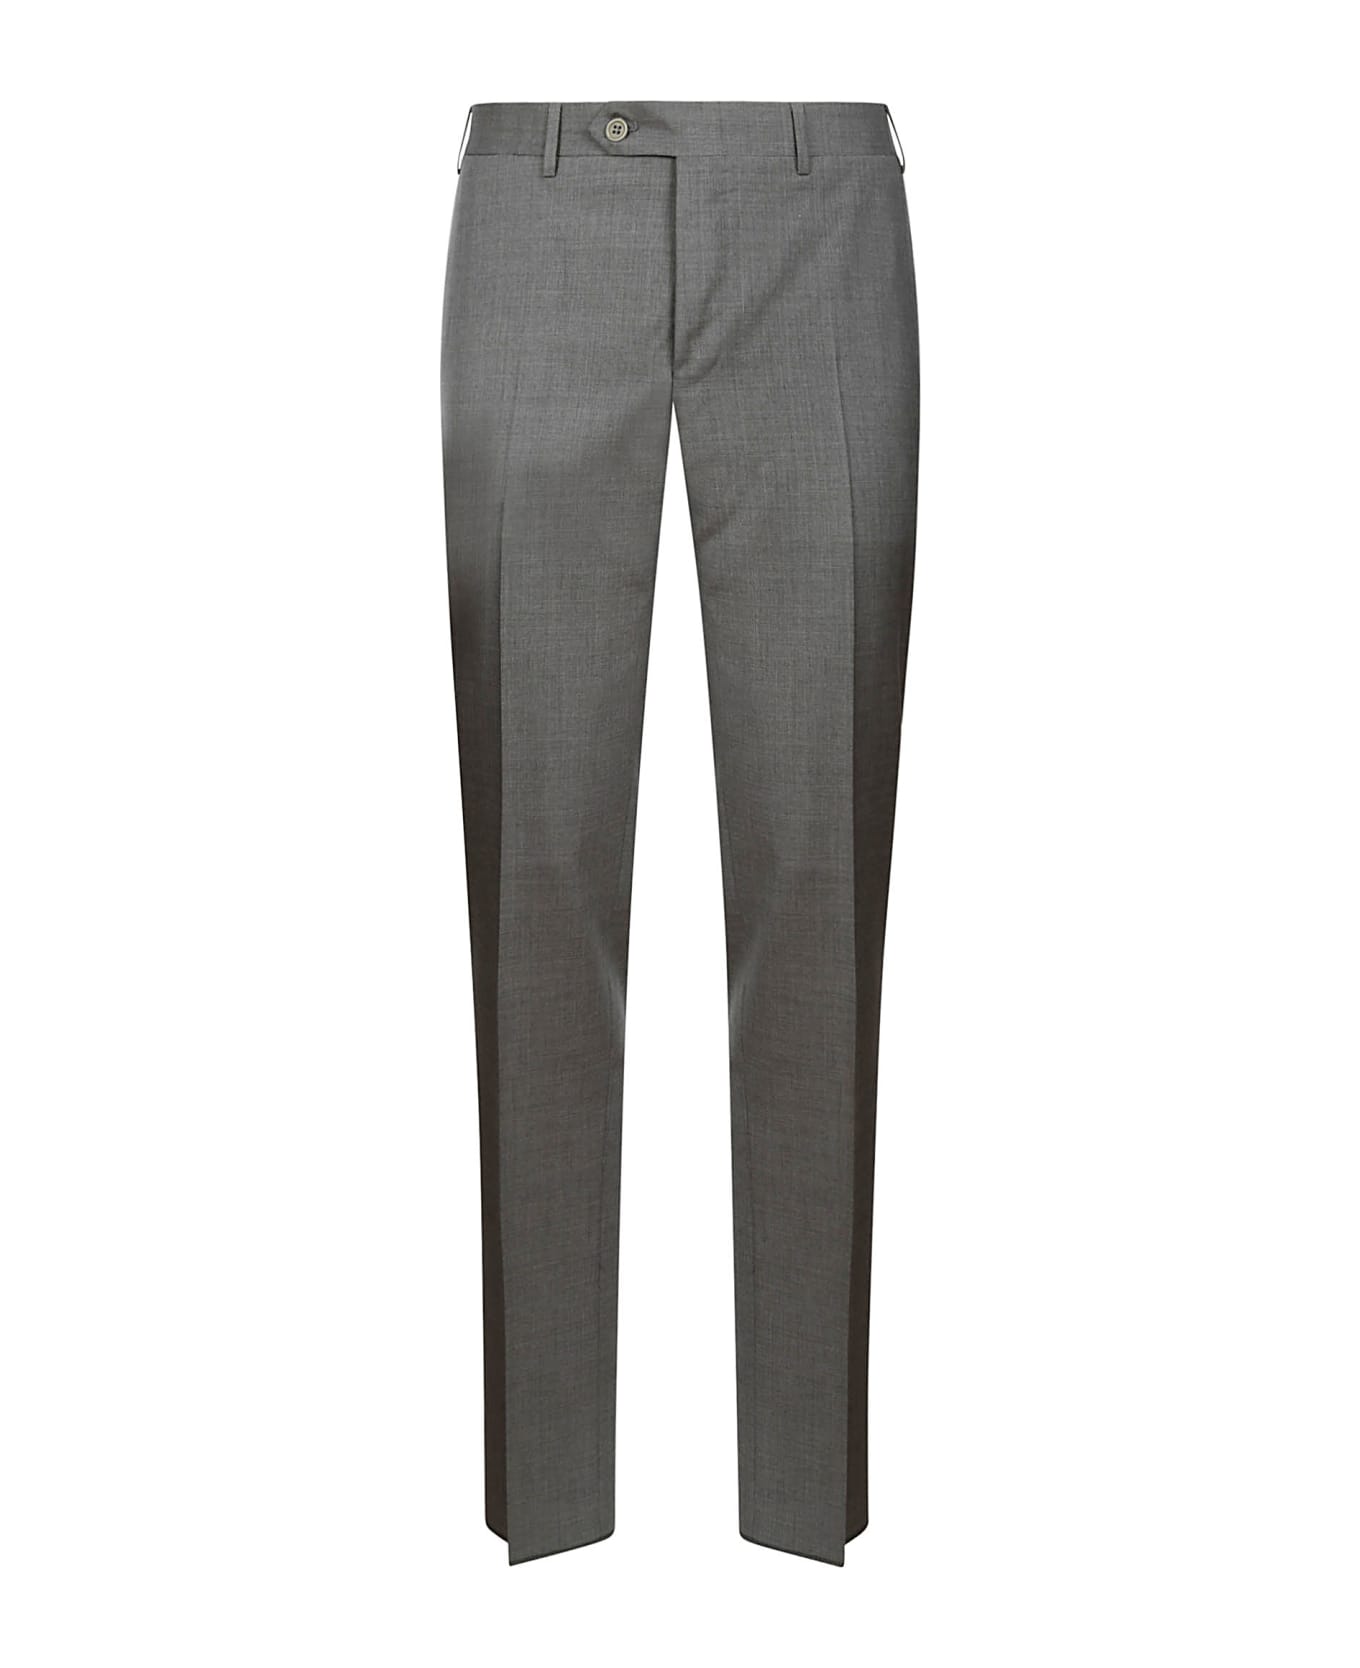 Canali Suit With Vest - Grey